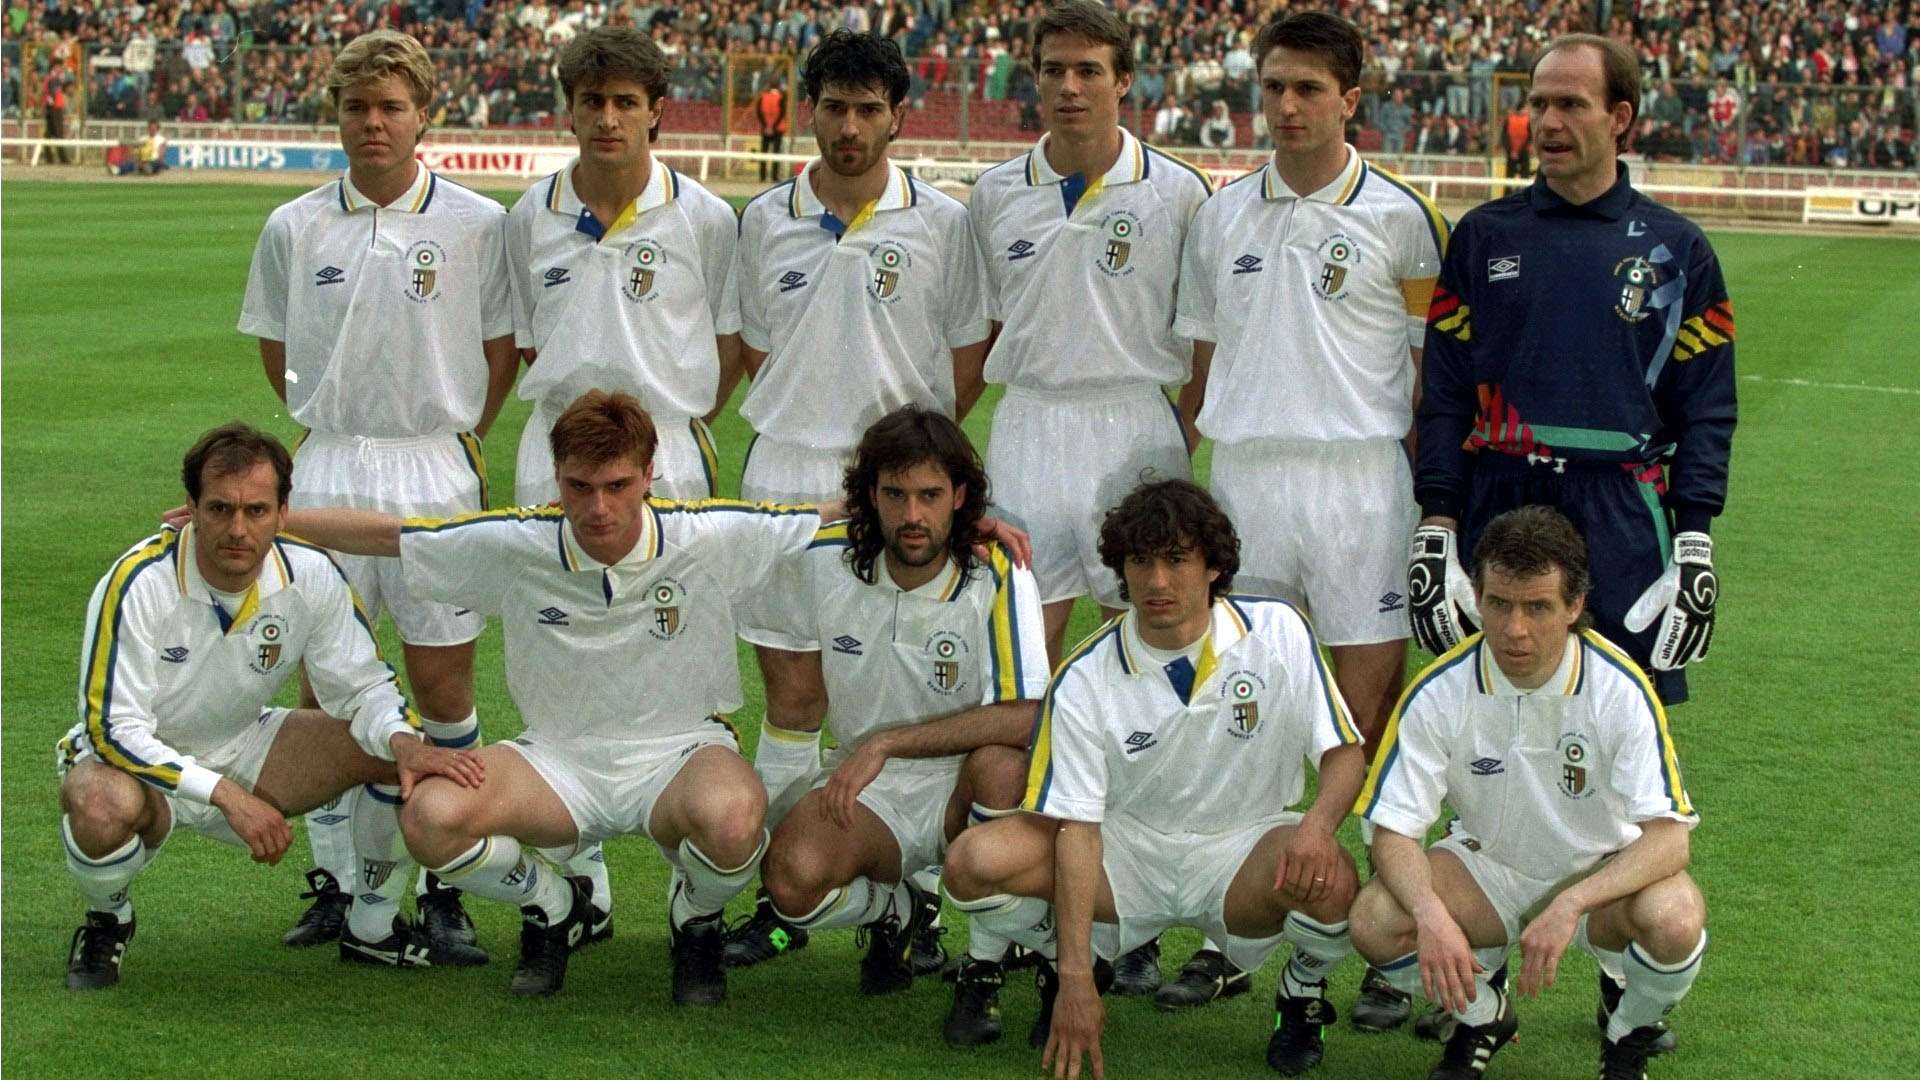 Parma 1993 Serie A